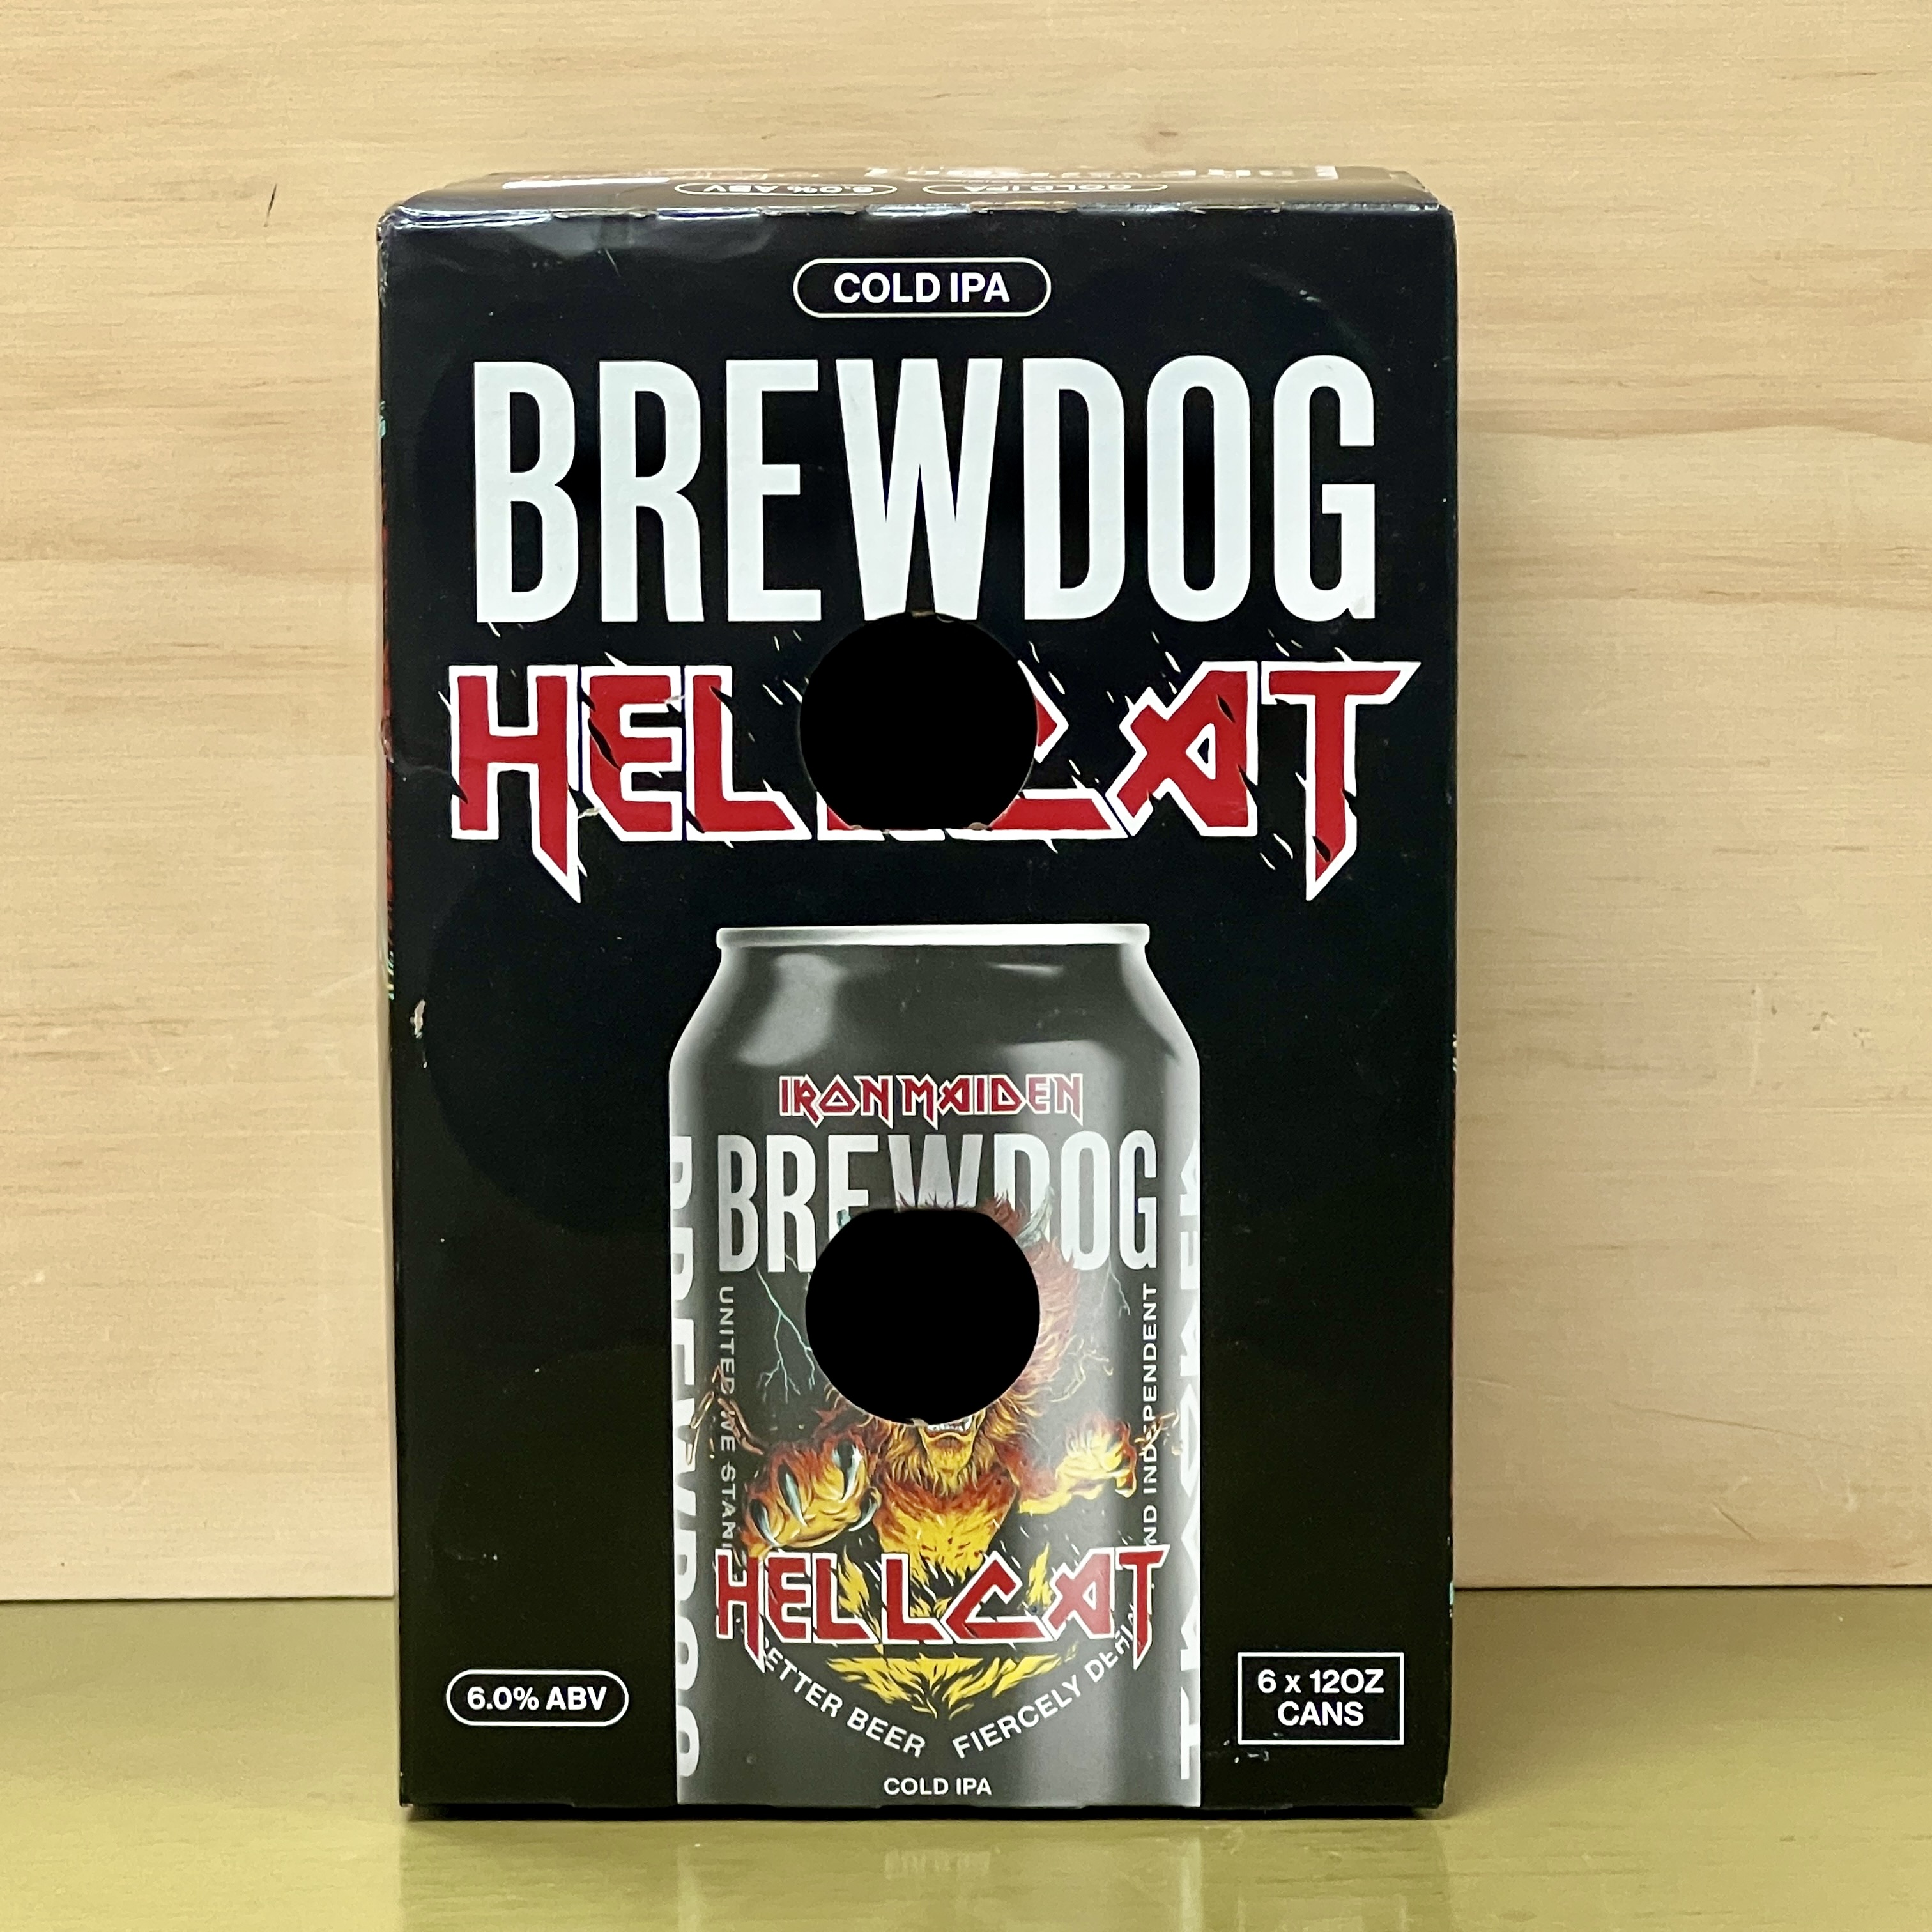 BrewDog Iron Maiden Hellcat Cold IPA 6 x 12oz cans